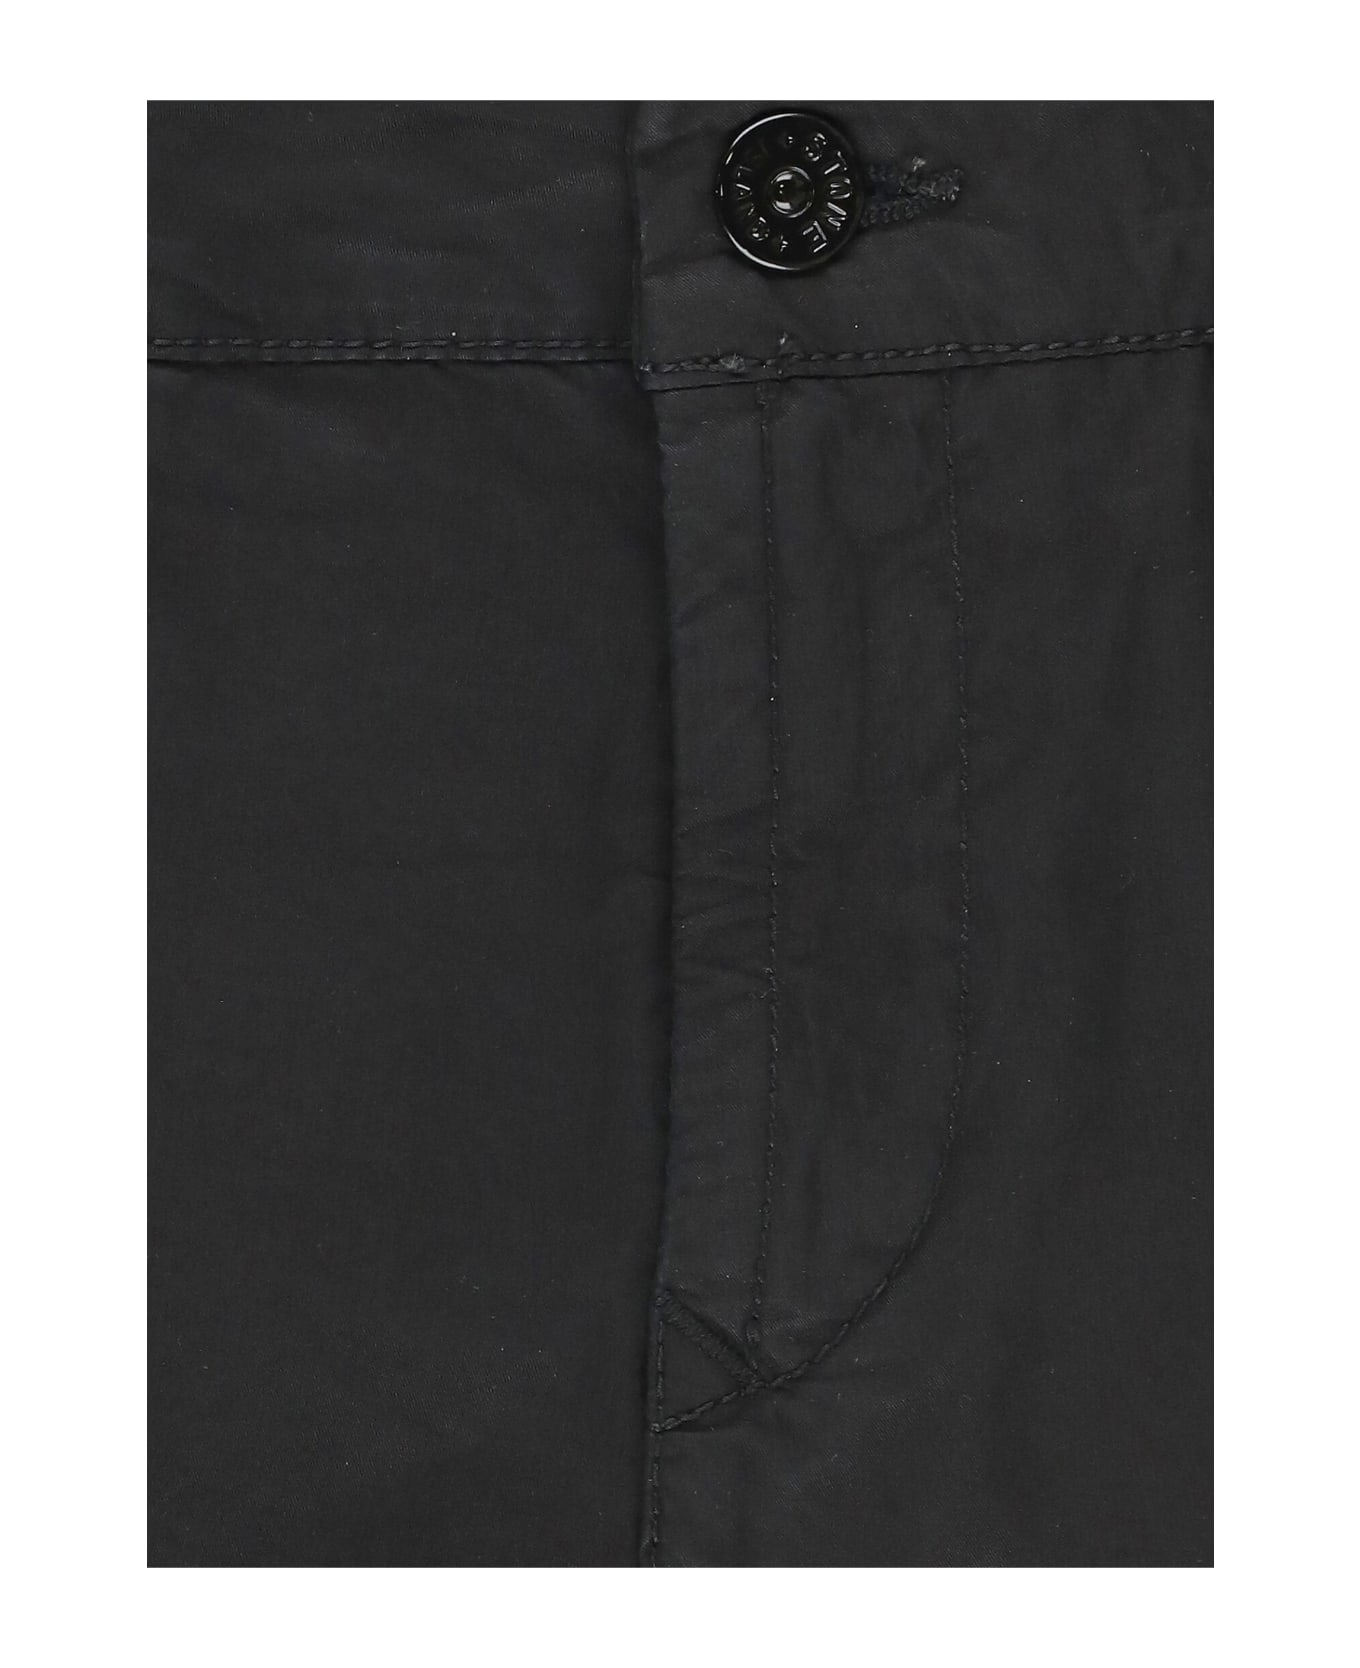 Stone Island Cotton Bermuda Shorts - Black ボトムス